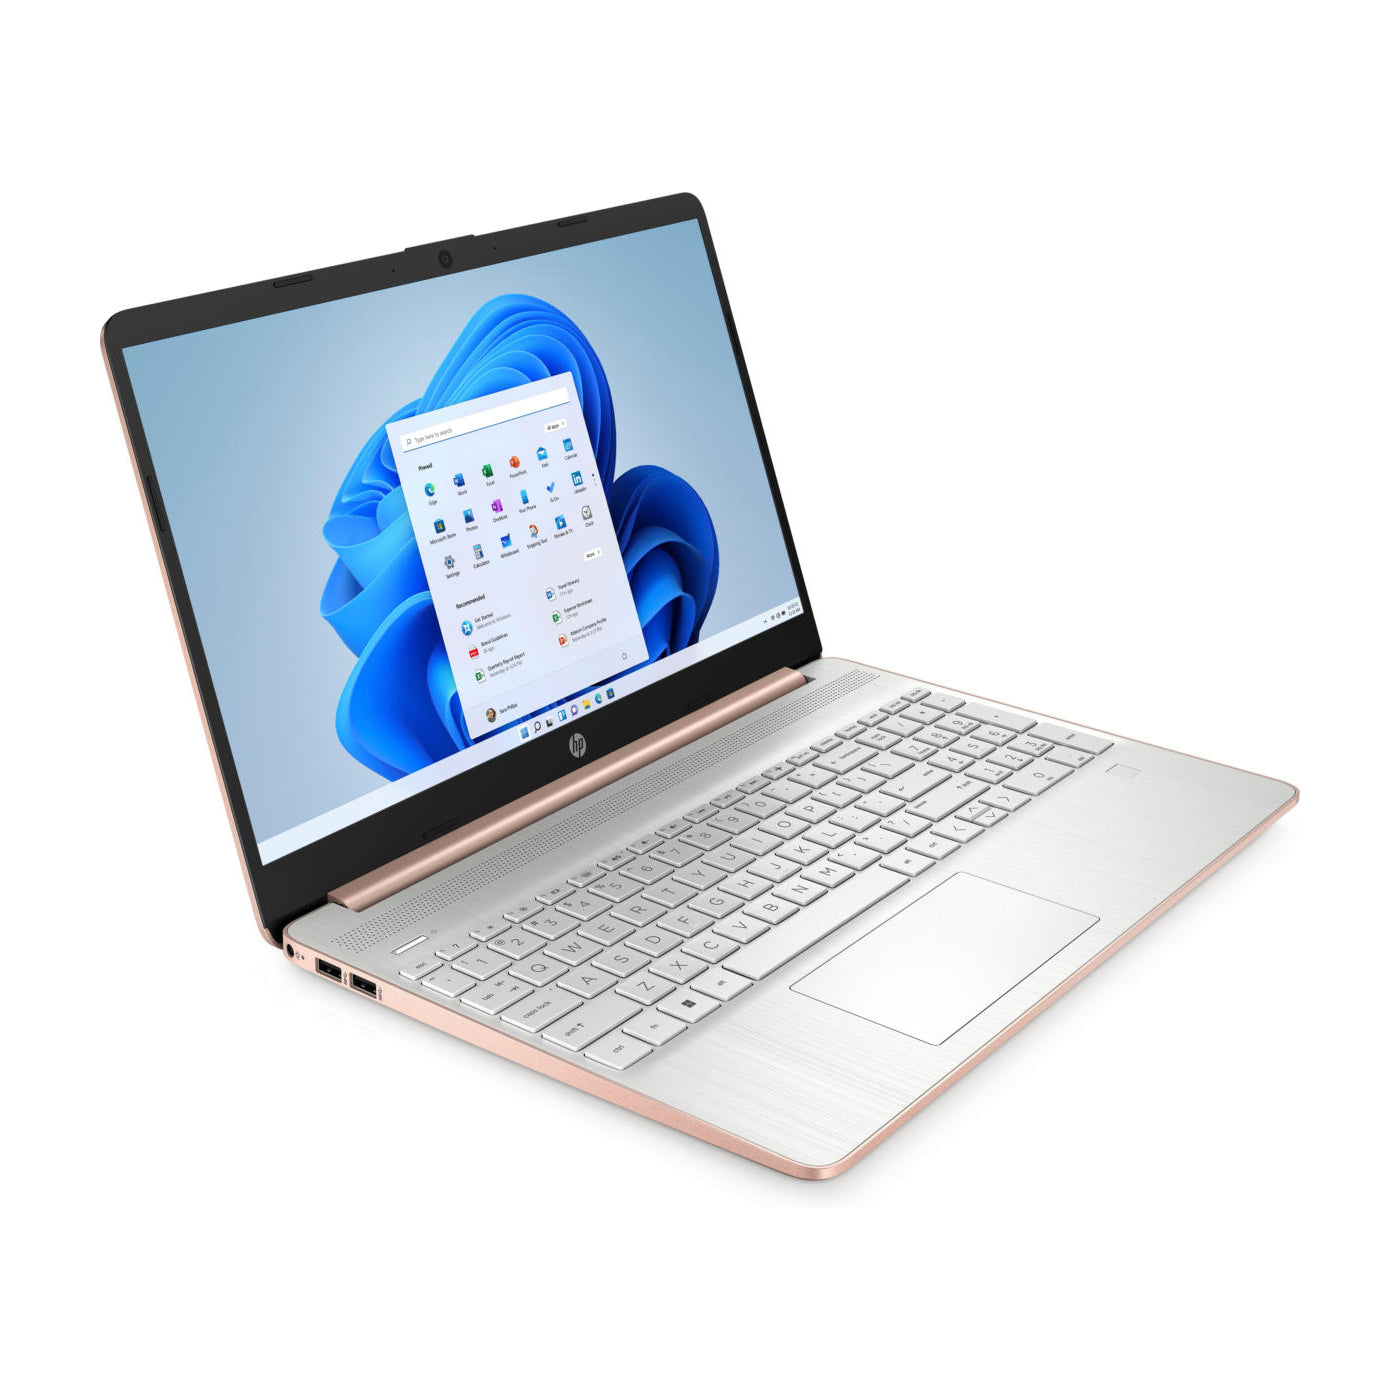 Hp 15-EF1716 Ryzen 3 3250u Radeon Graphics 15.6” Laptop Offers (New OB)